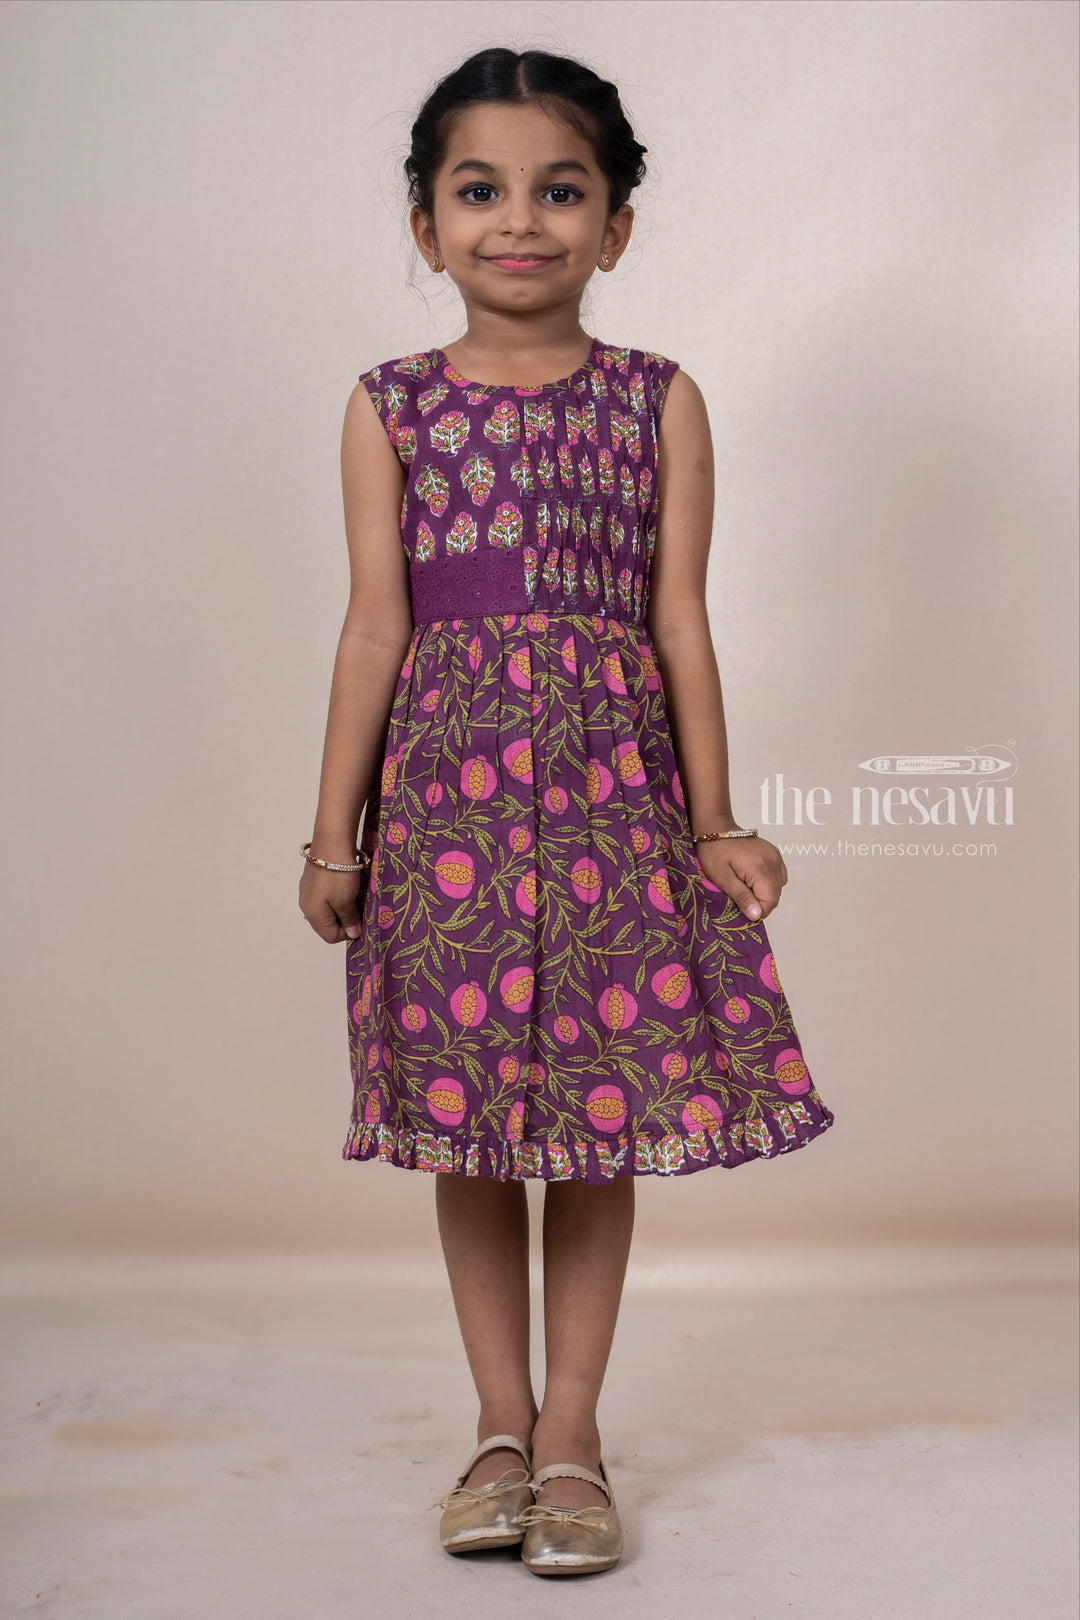 The Nesavu Frocks & Dresses Magenta Pink Floral Pin-Tucked Soft Cotton Gown For Baby Girls psr silks Nesavu 14 (6M) / MediumVioletRed GFC900